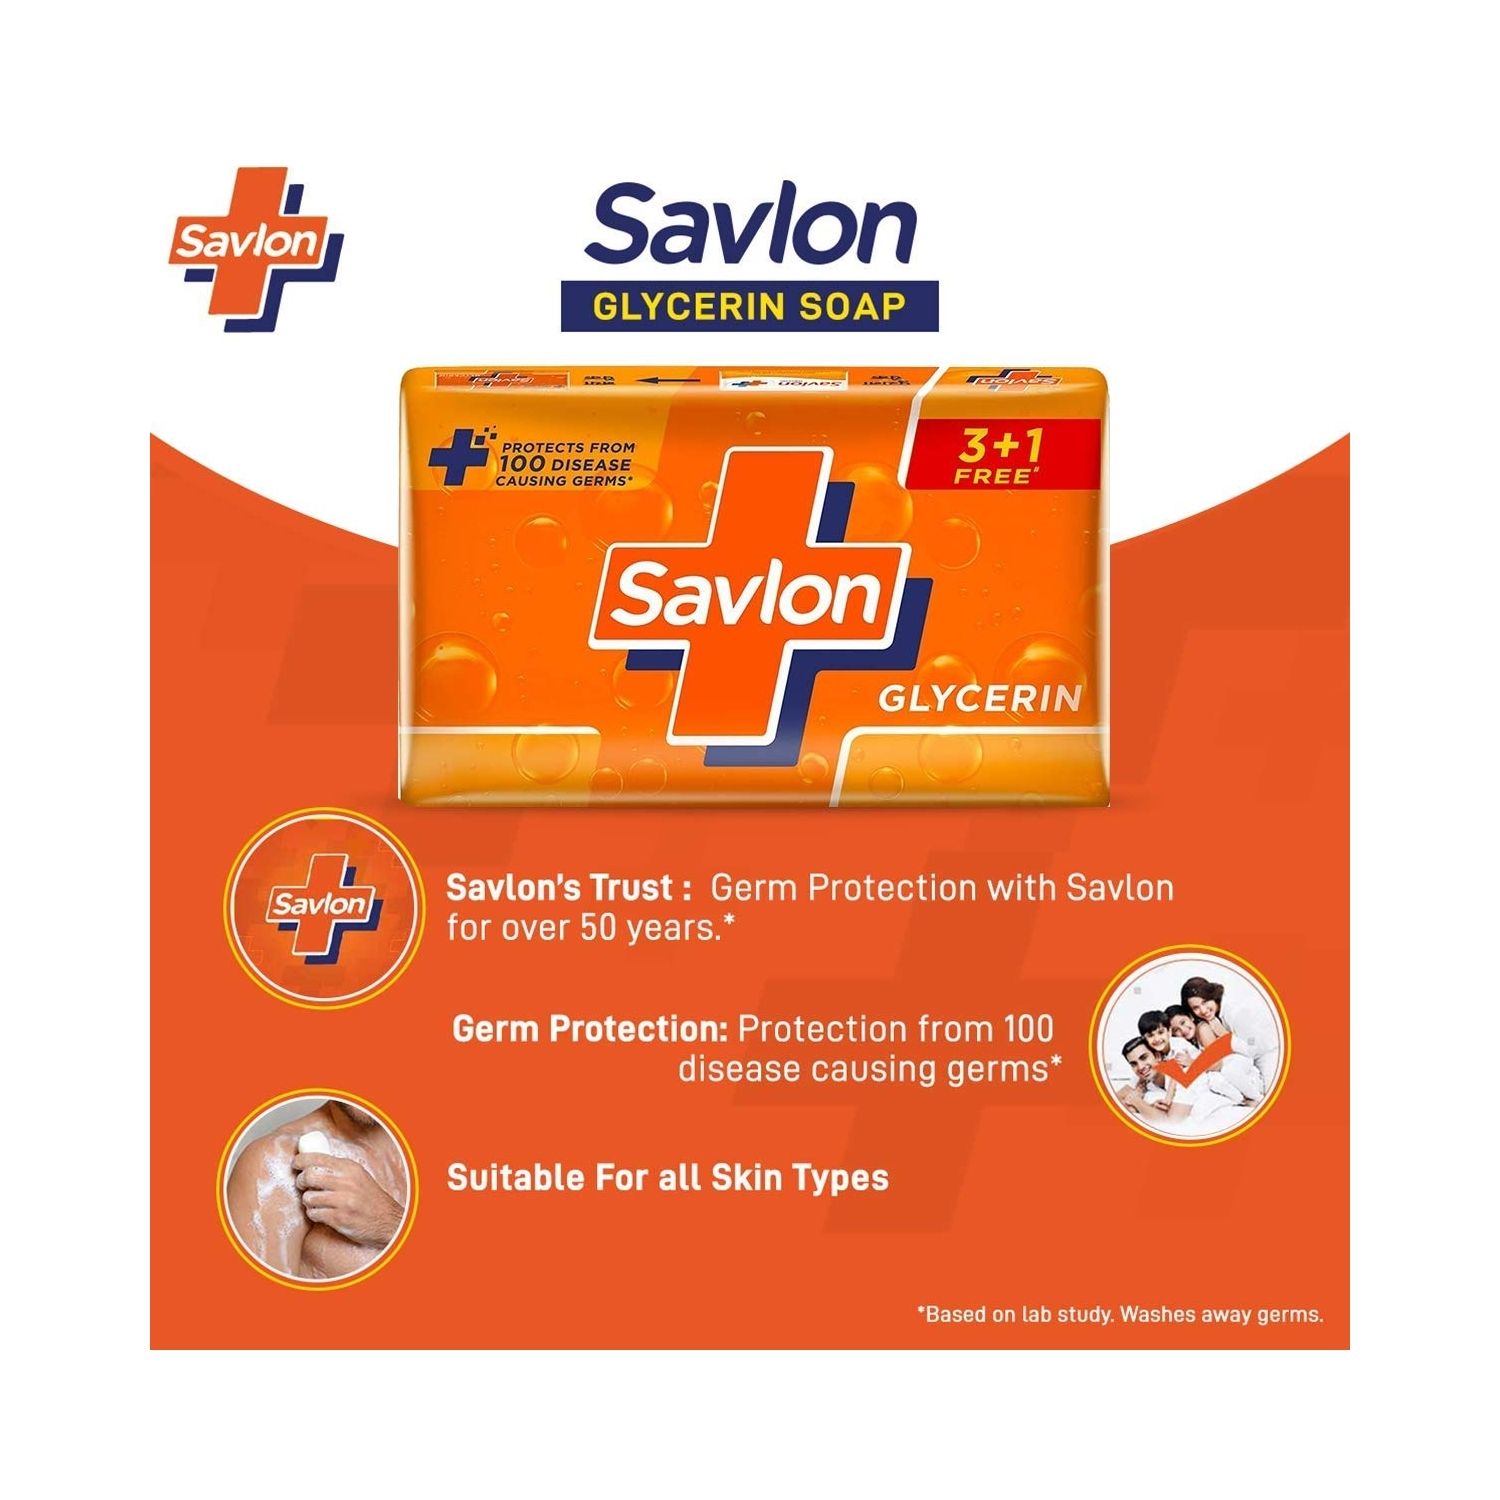 Savlon Antiseptic Solution by savlon - Issuu